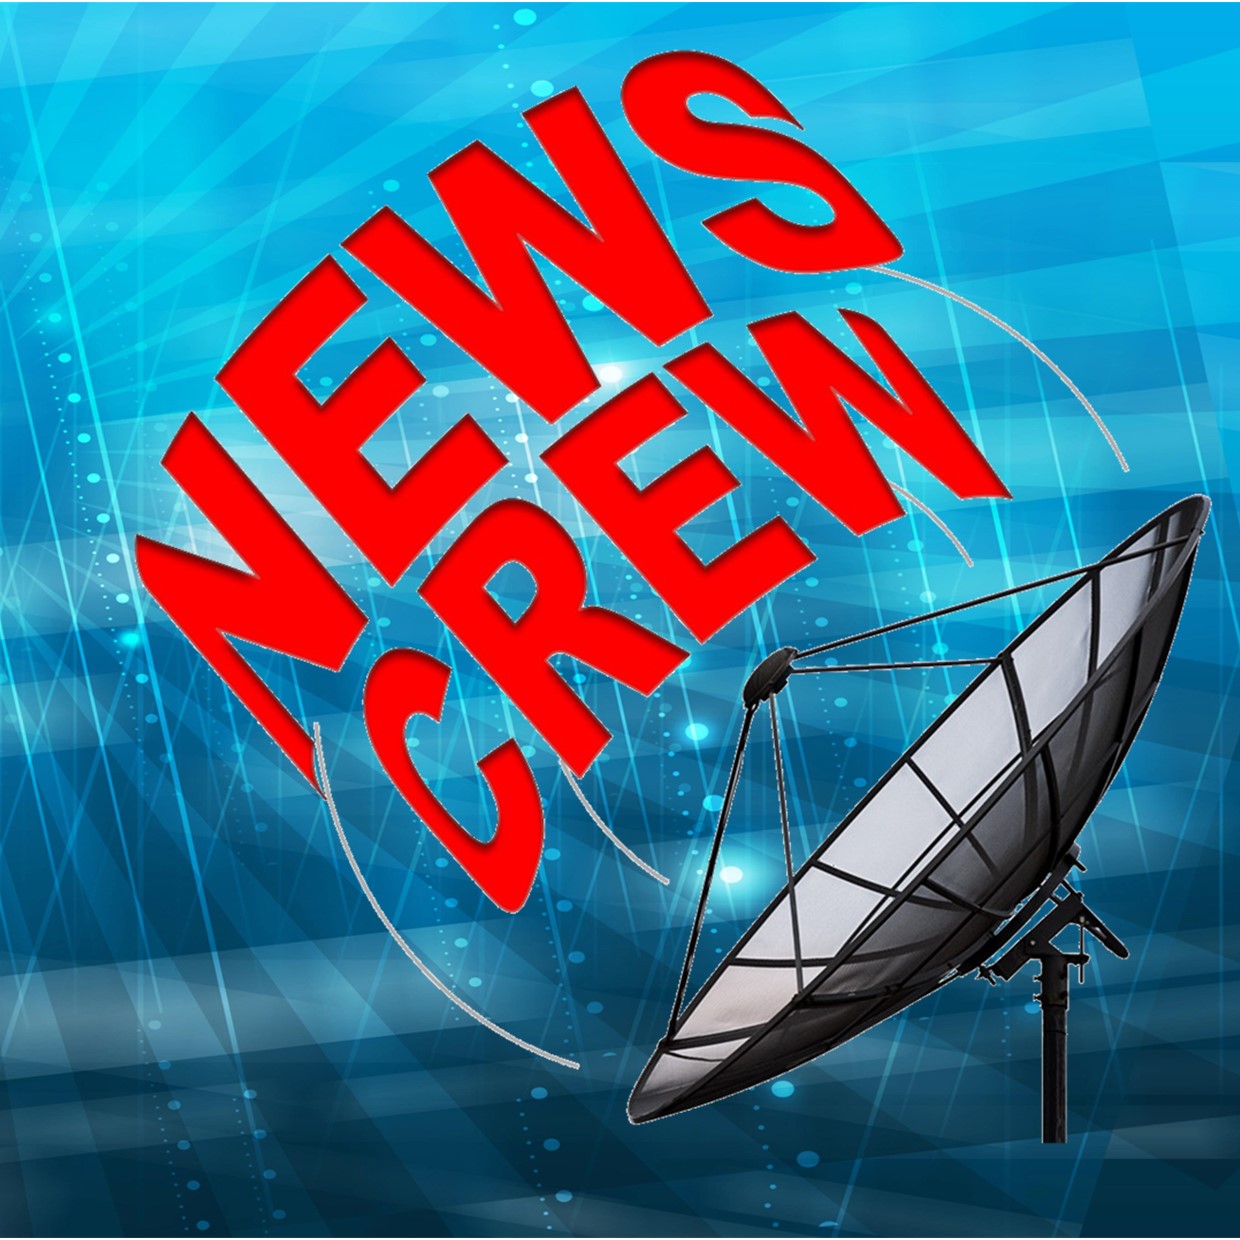 news crew logo